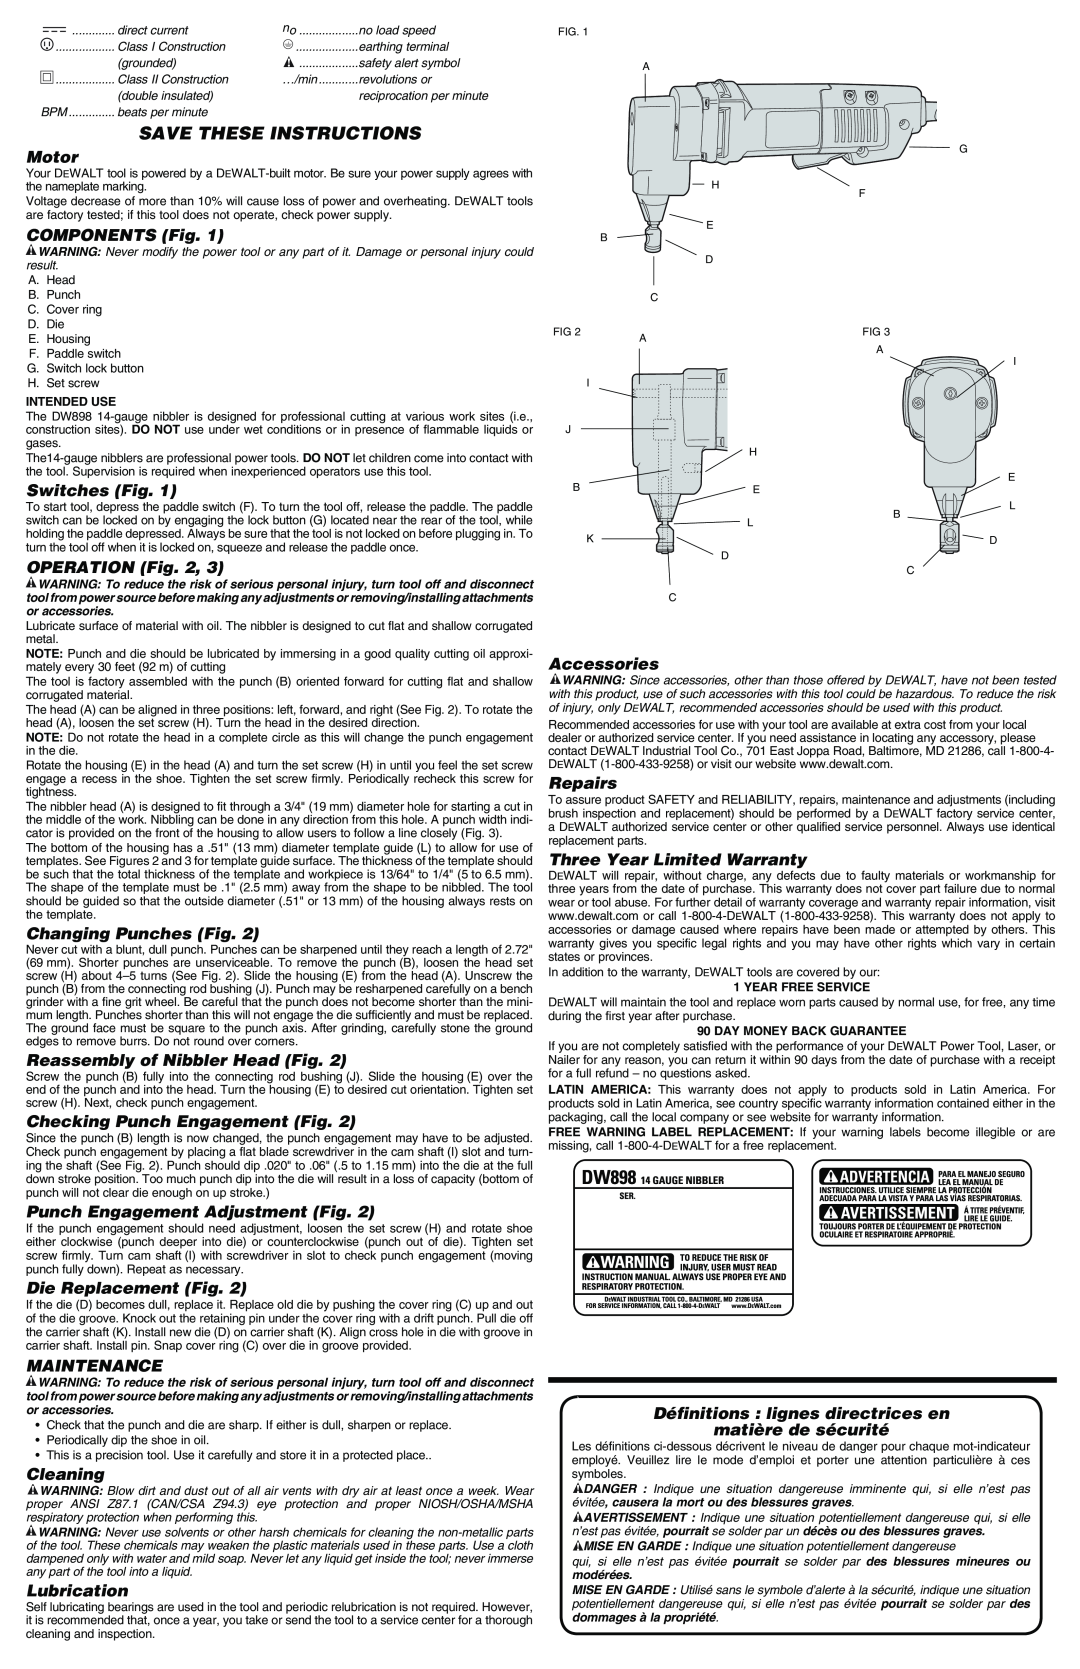 DeWalt DW898 instruction manual Save These Instructions 